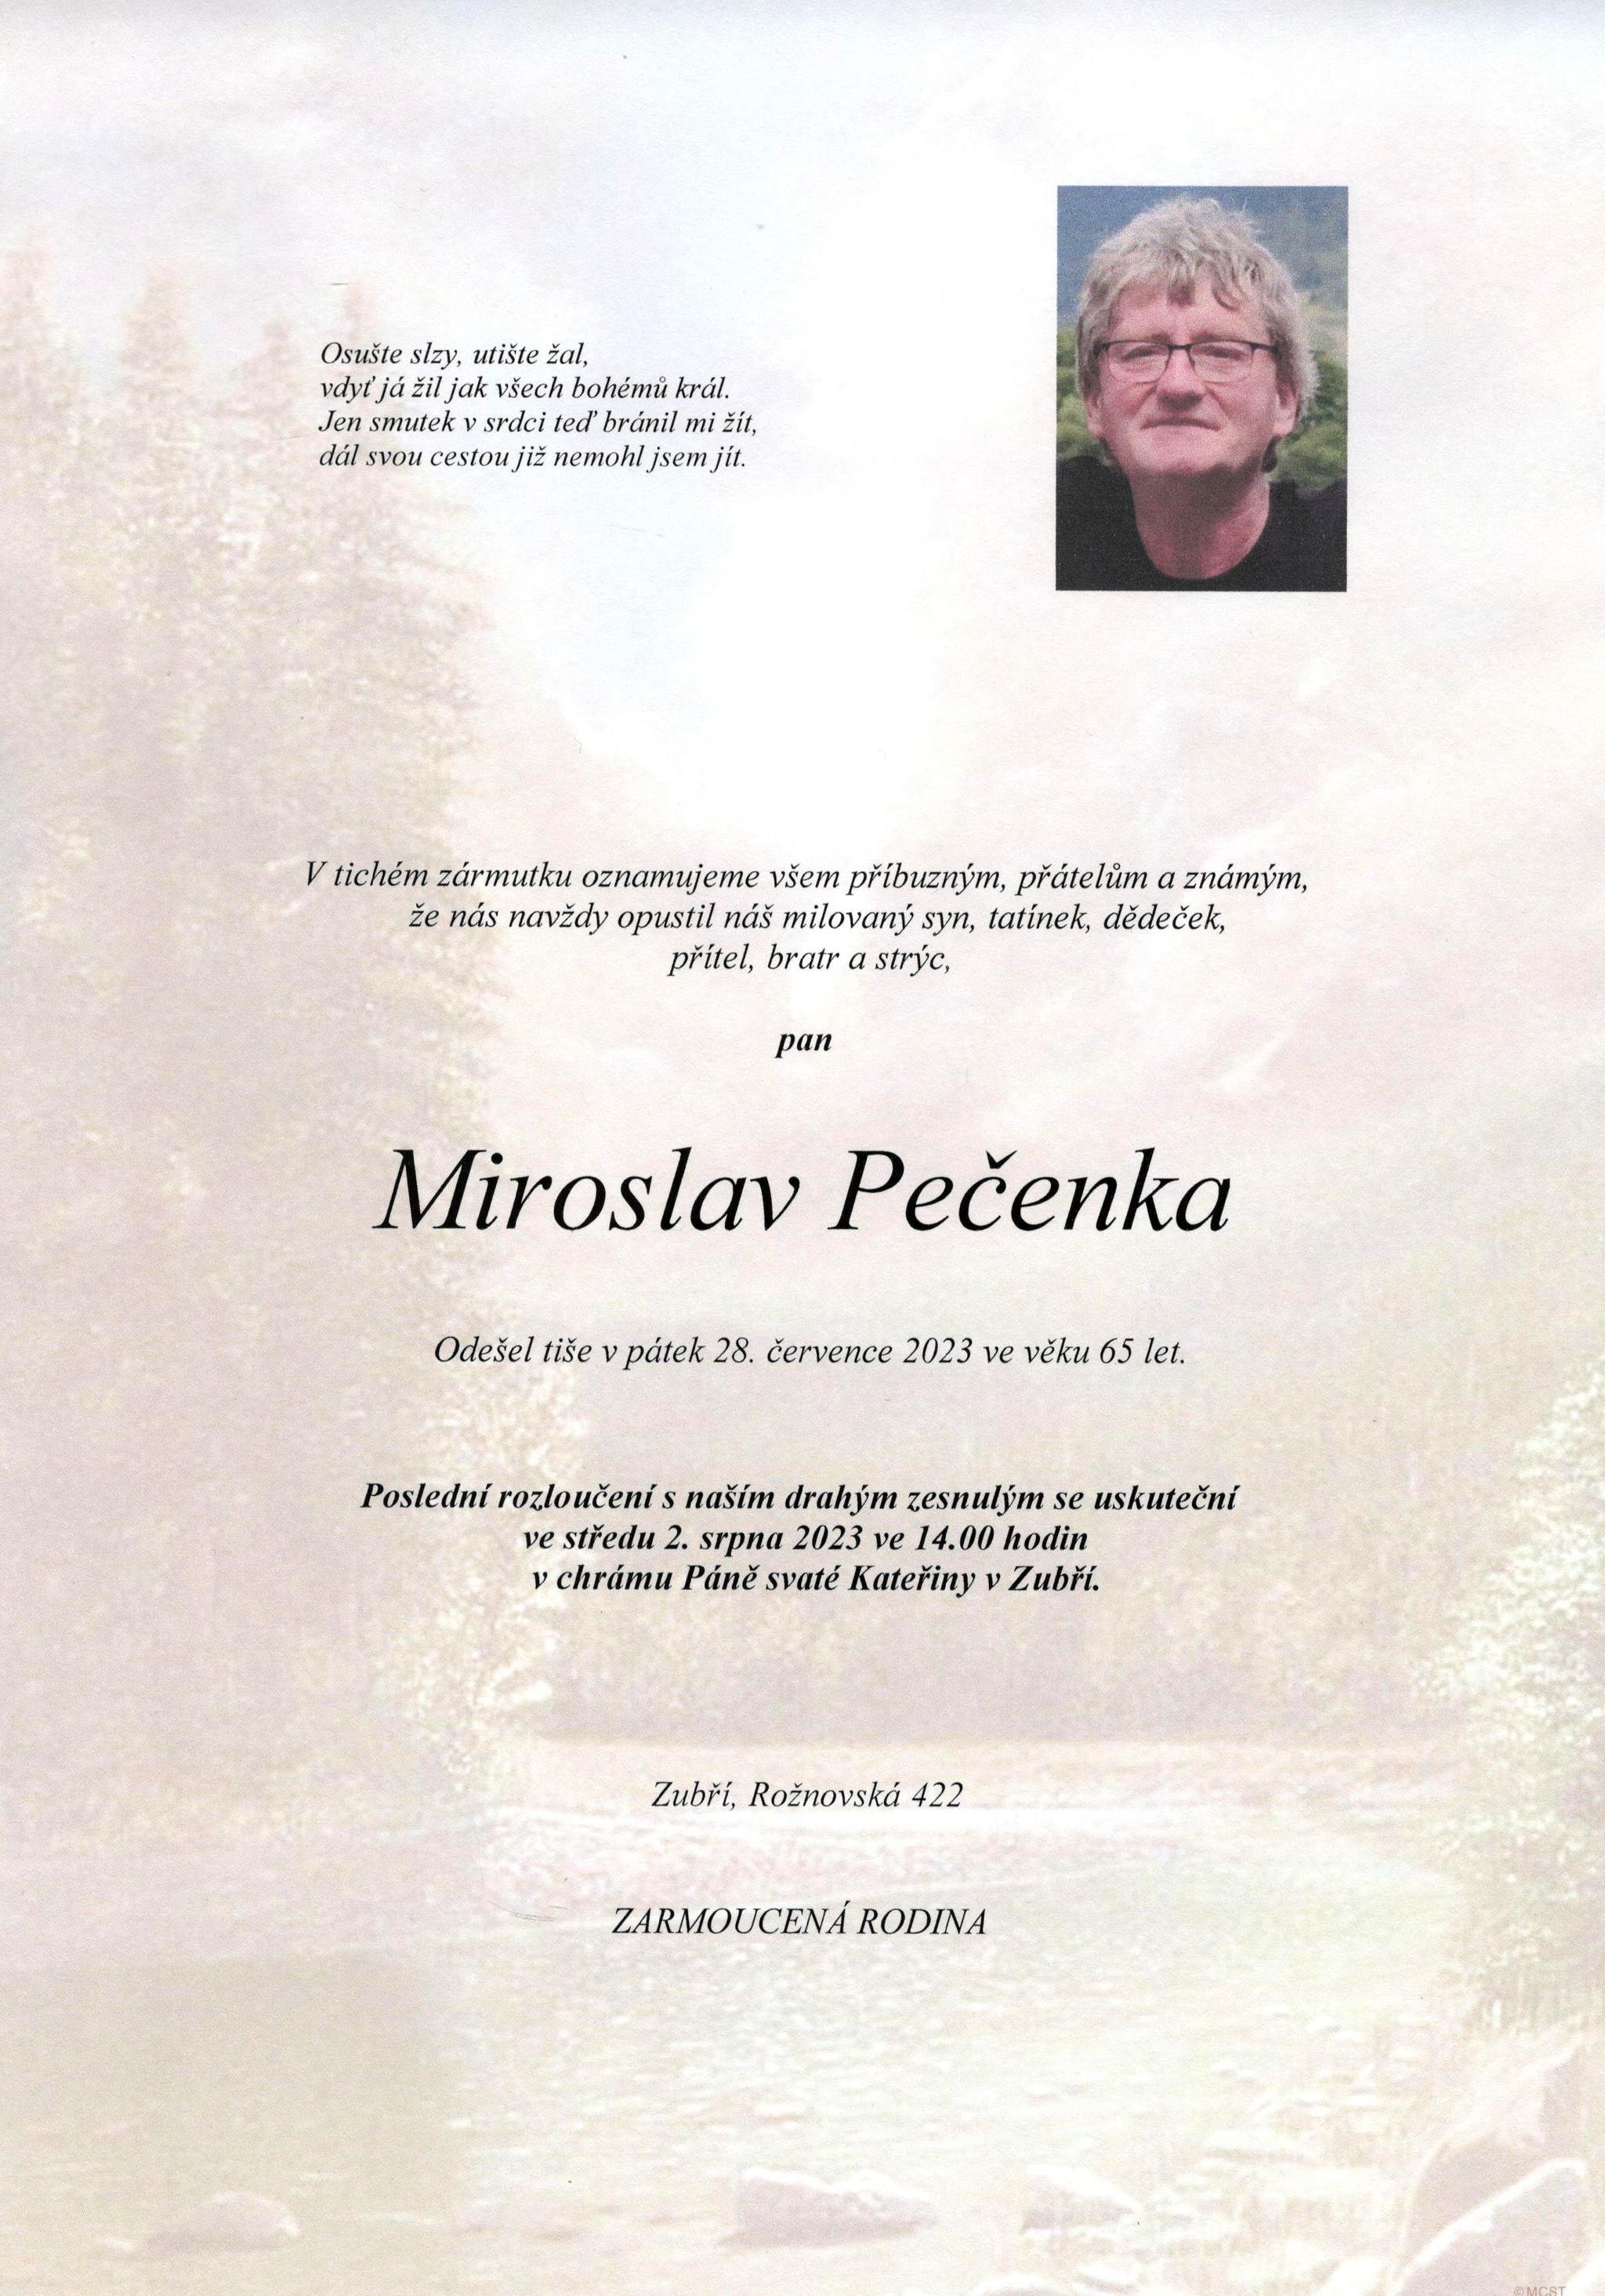 Miroslav Pečenka